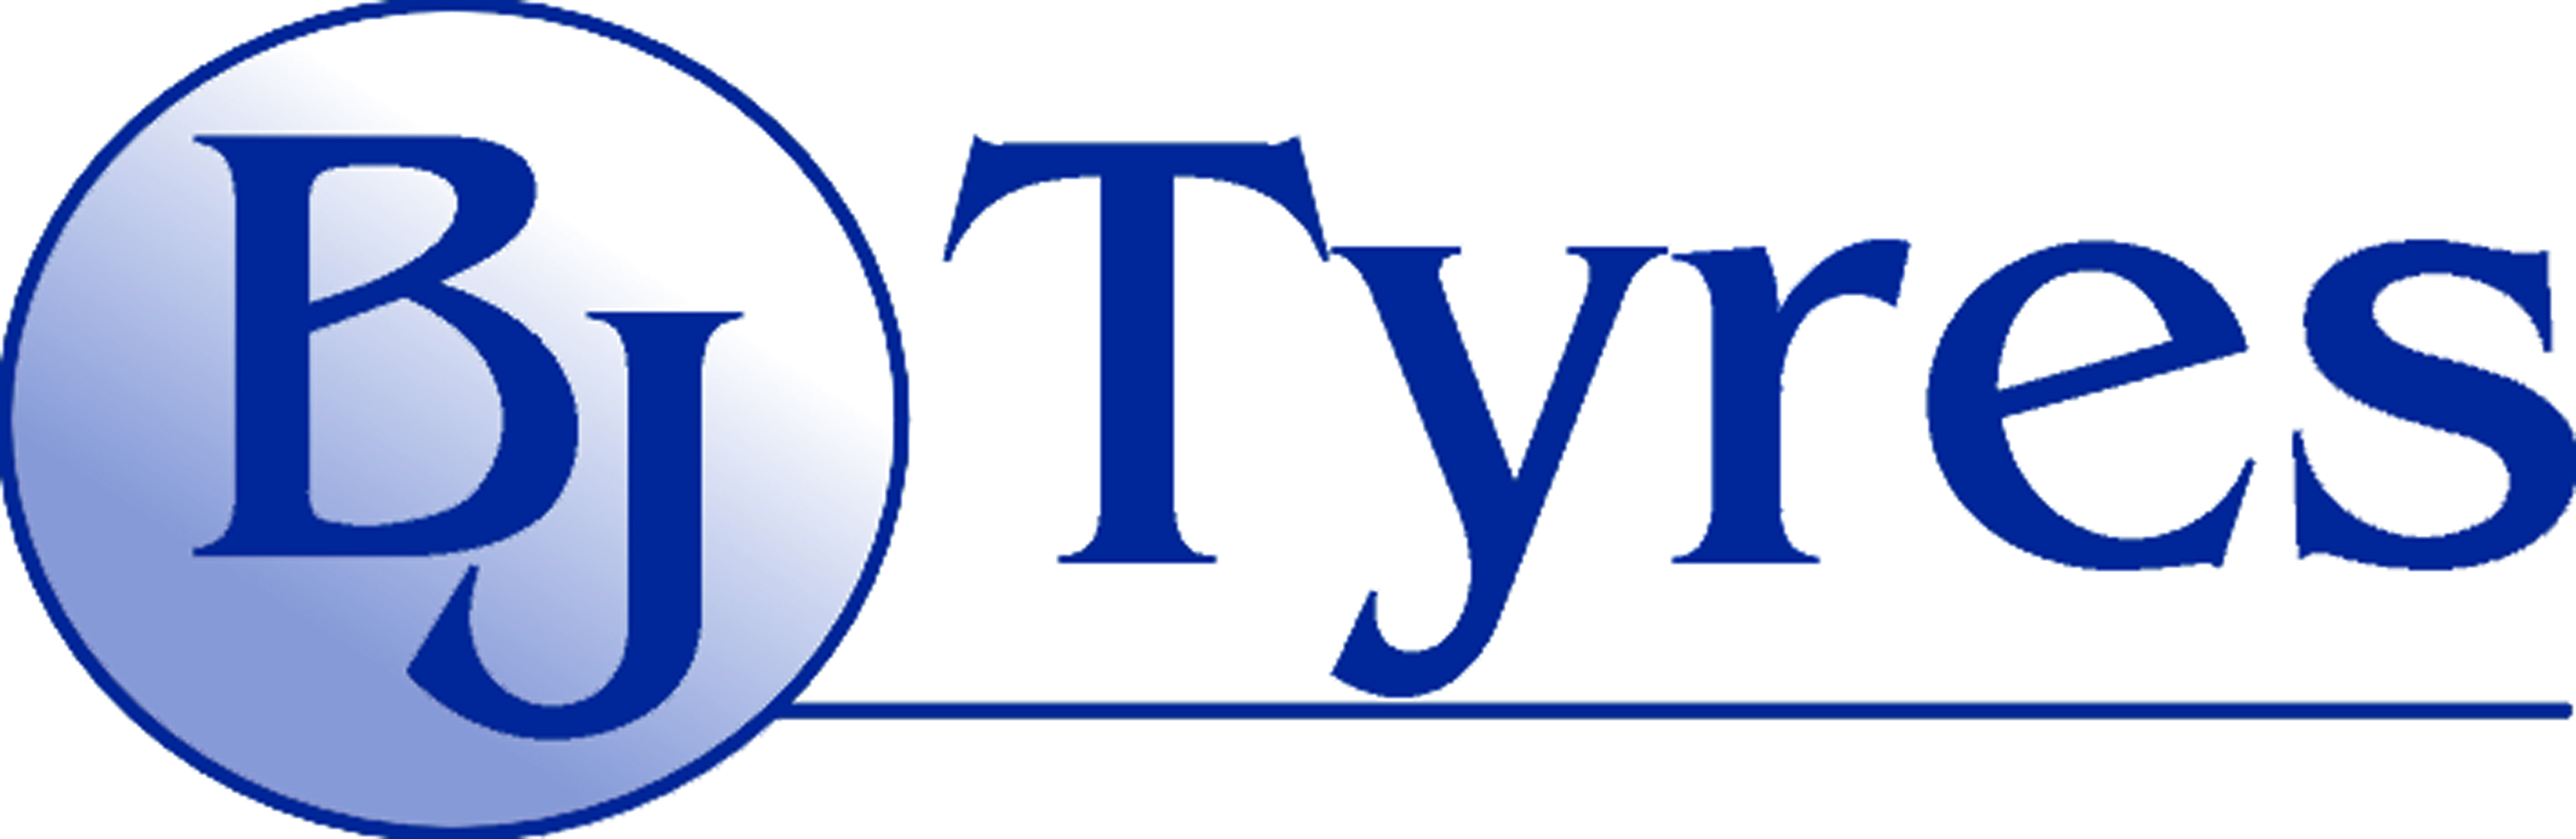 tyres logo